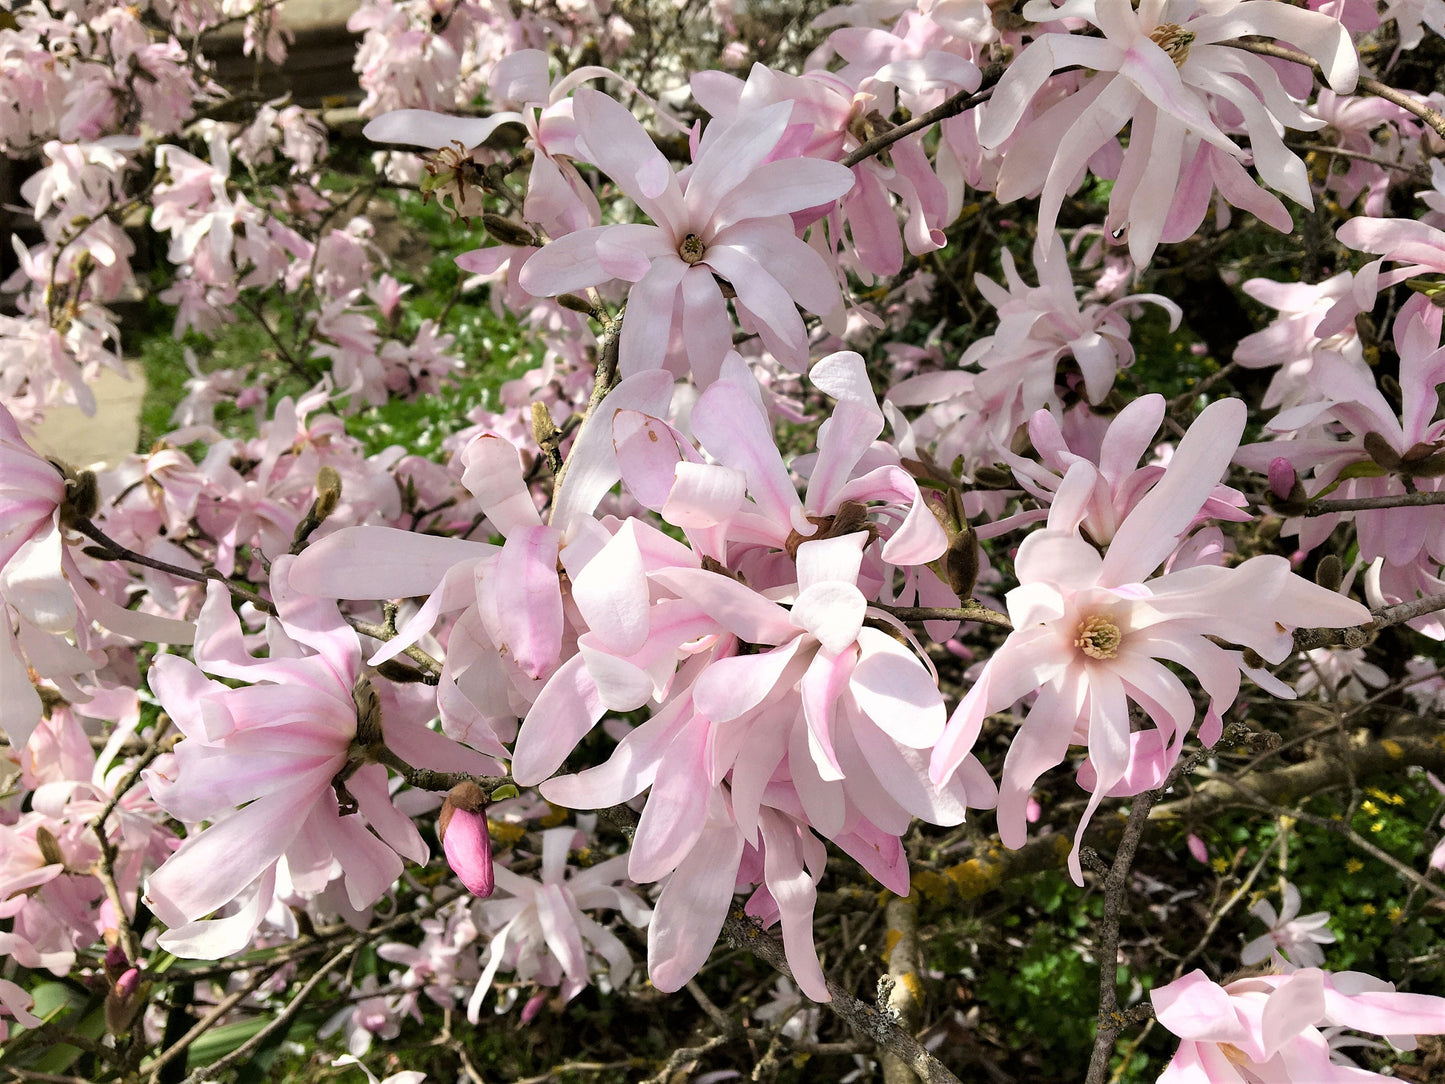 5 LOEBNER MAGNOLIA Loebneri TREE Shrub Seeds - Cross of M Stellata & Kobus - Fragrant Pink White Huge 3 - 5" Wide Flowers